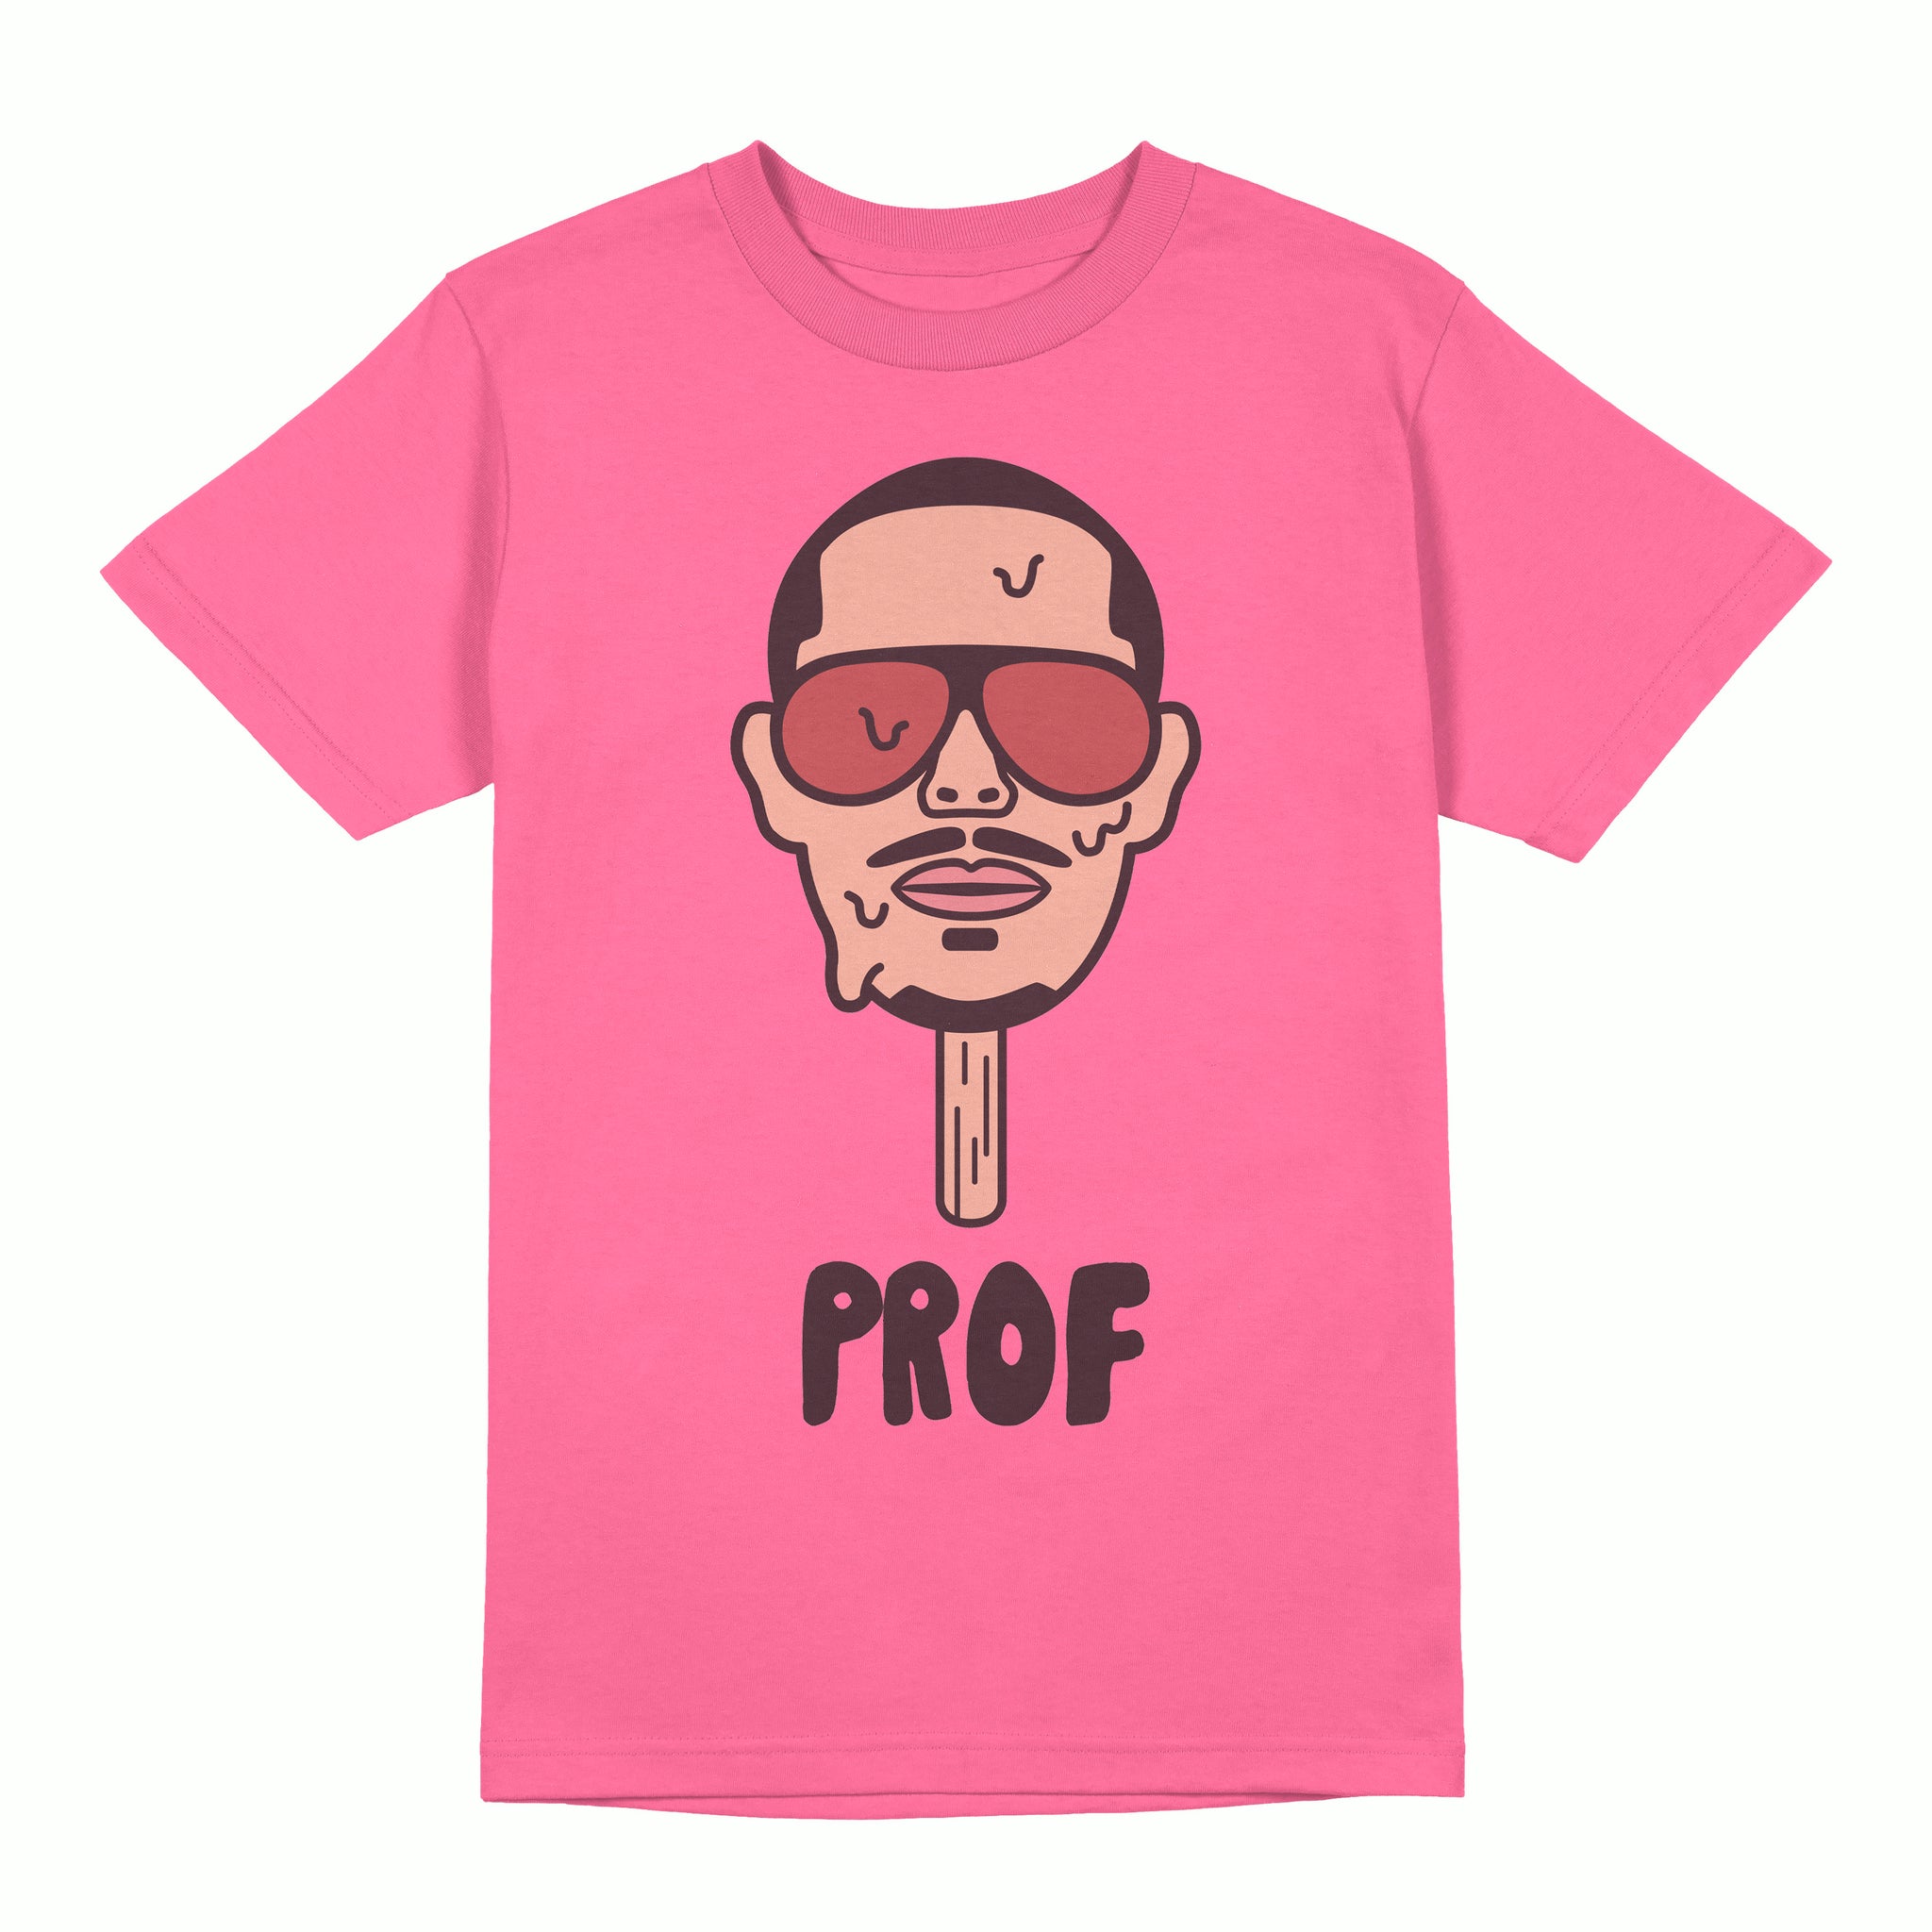 PROF "Profsicle" Pink T-Shirt